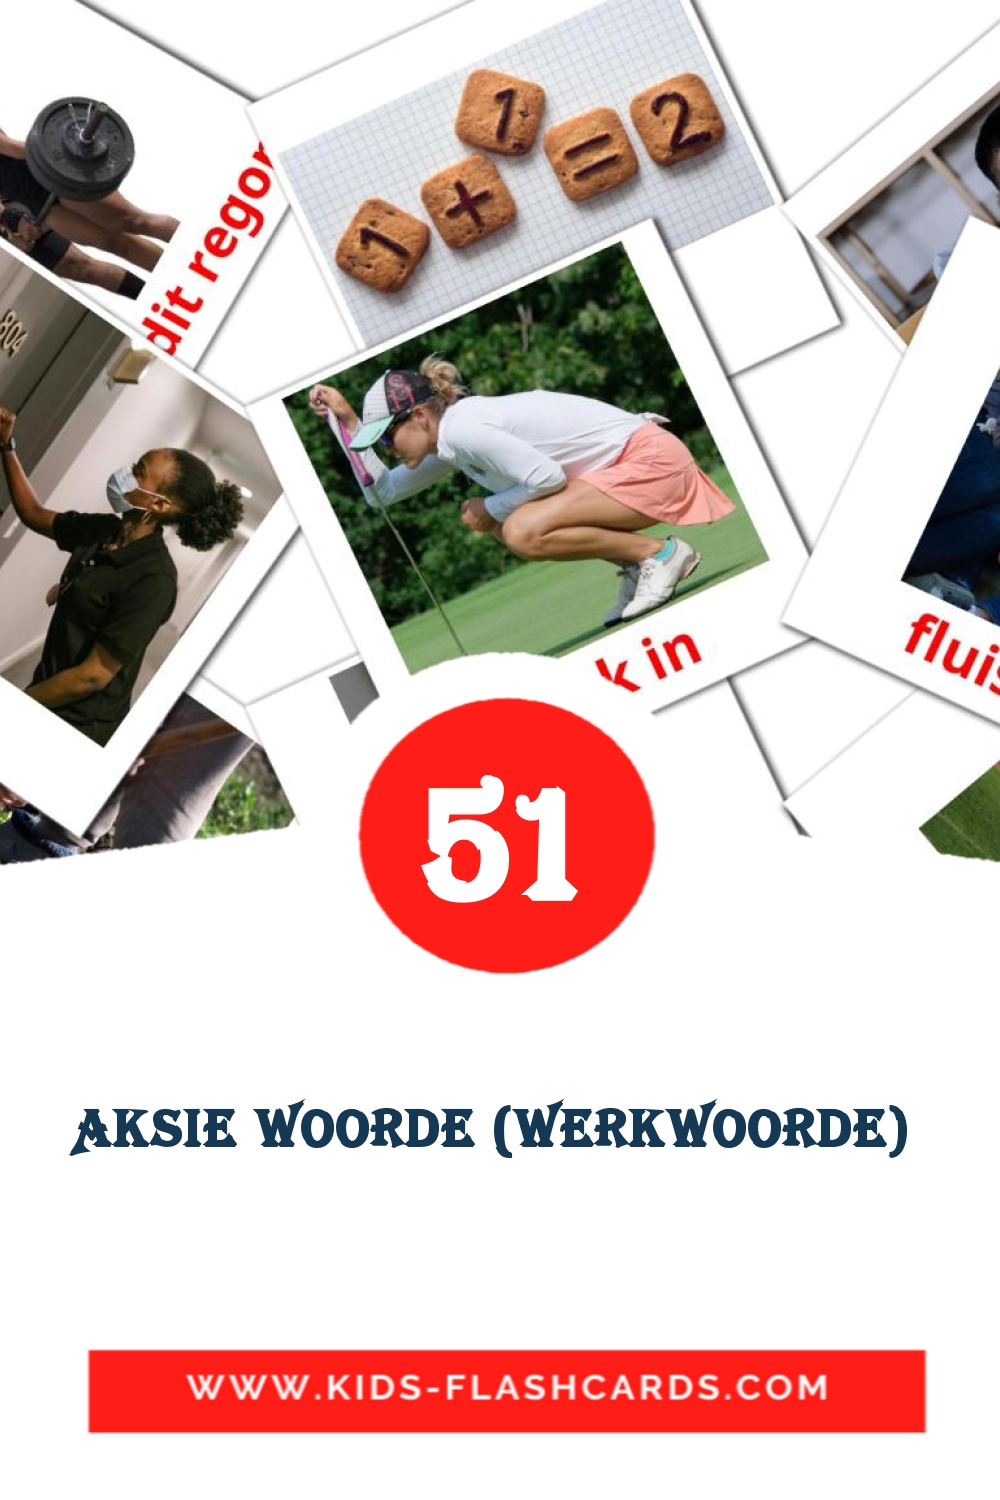 51 Aksie woorde (werkwoorde)  Picture Cards for Kindergarden in afrikaans